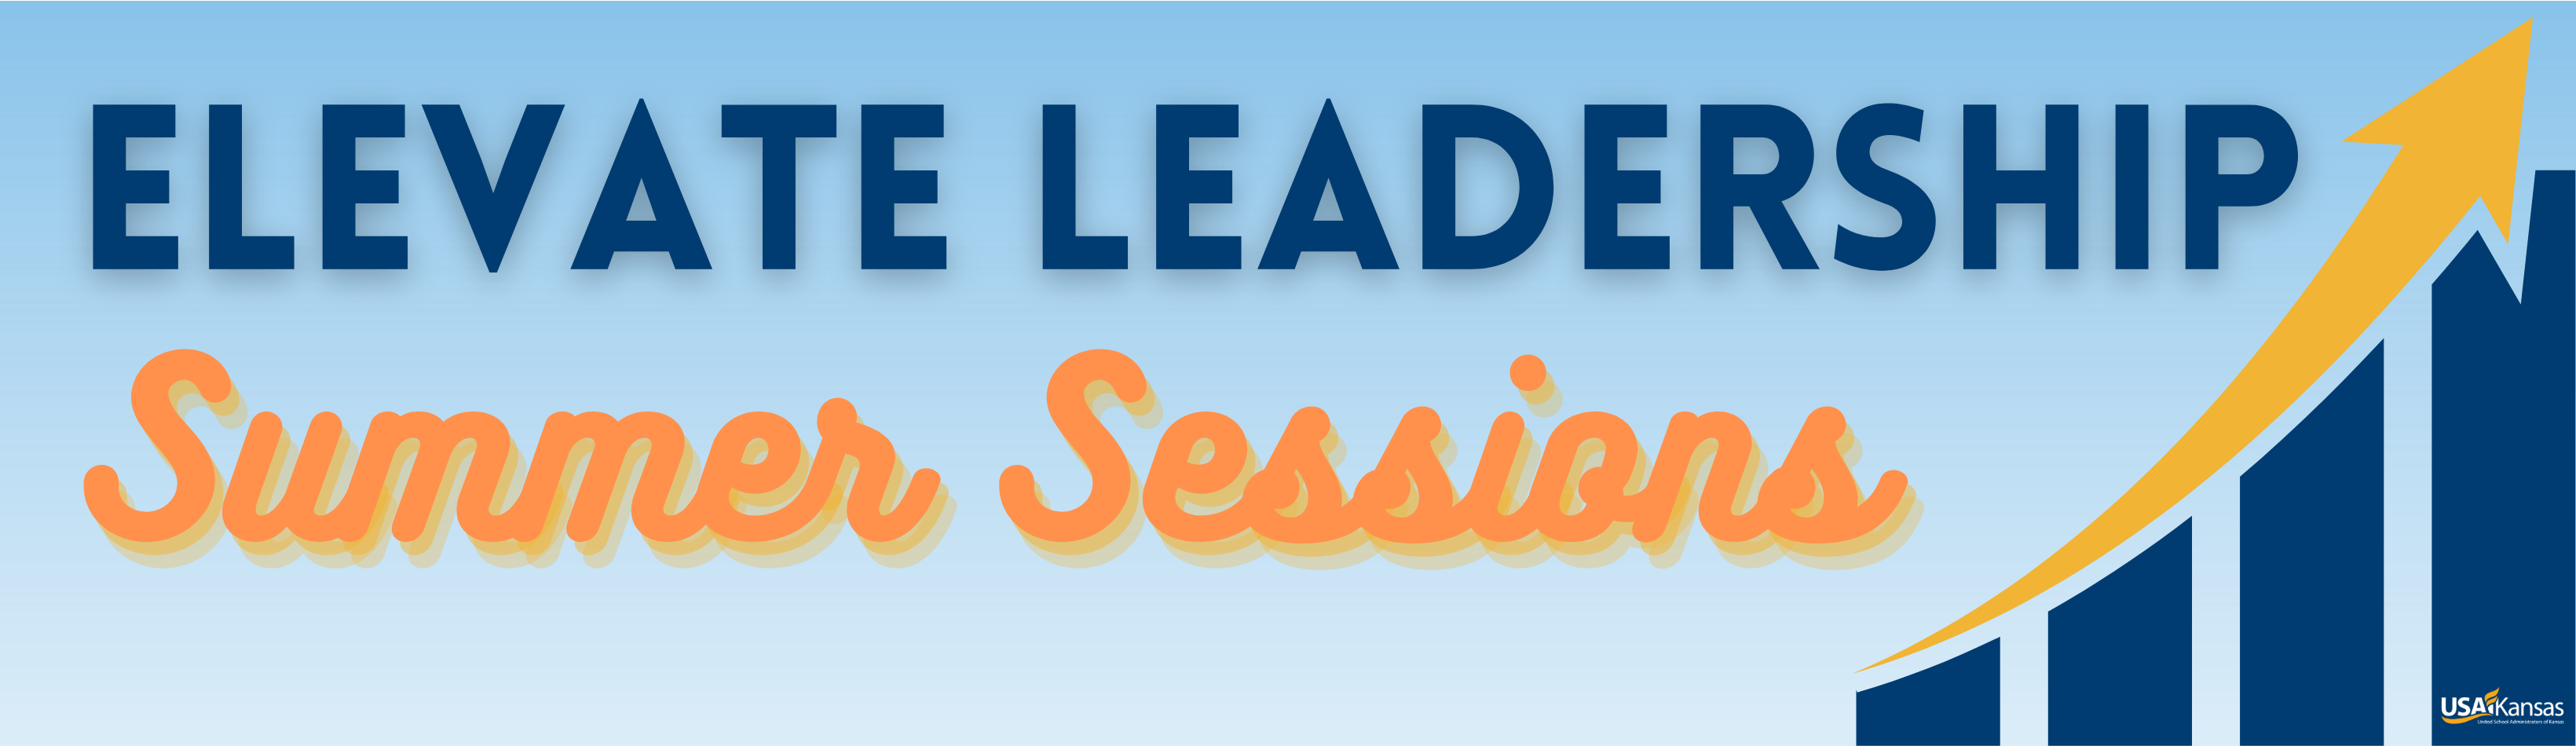 Elevate Leadership Summer Sessions